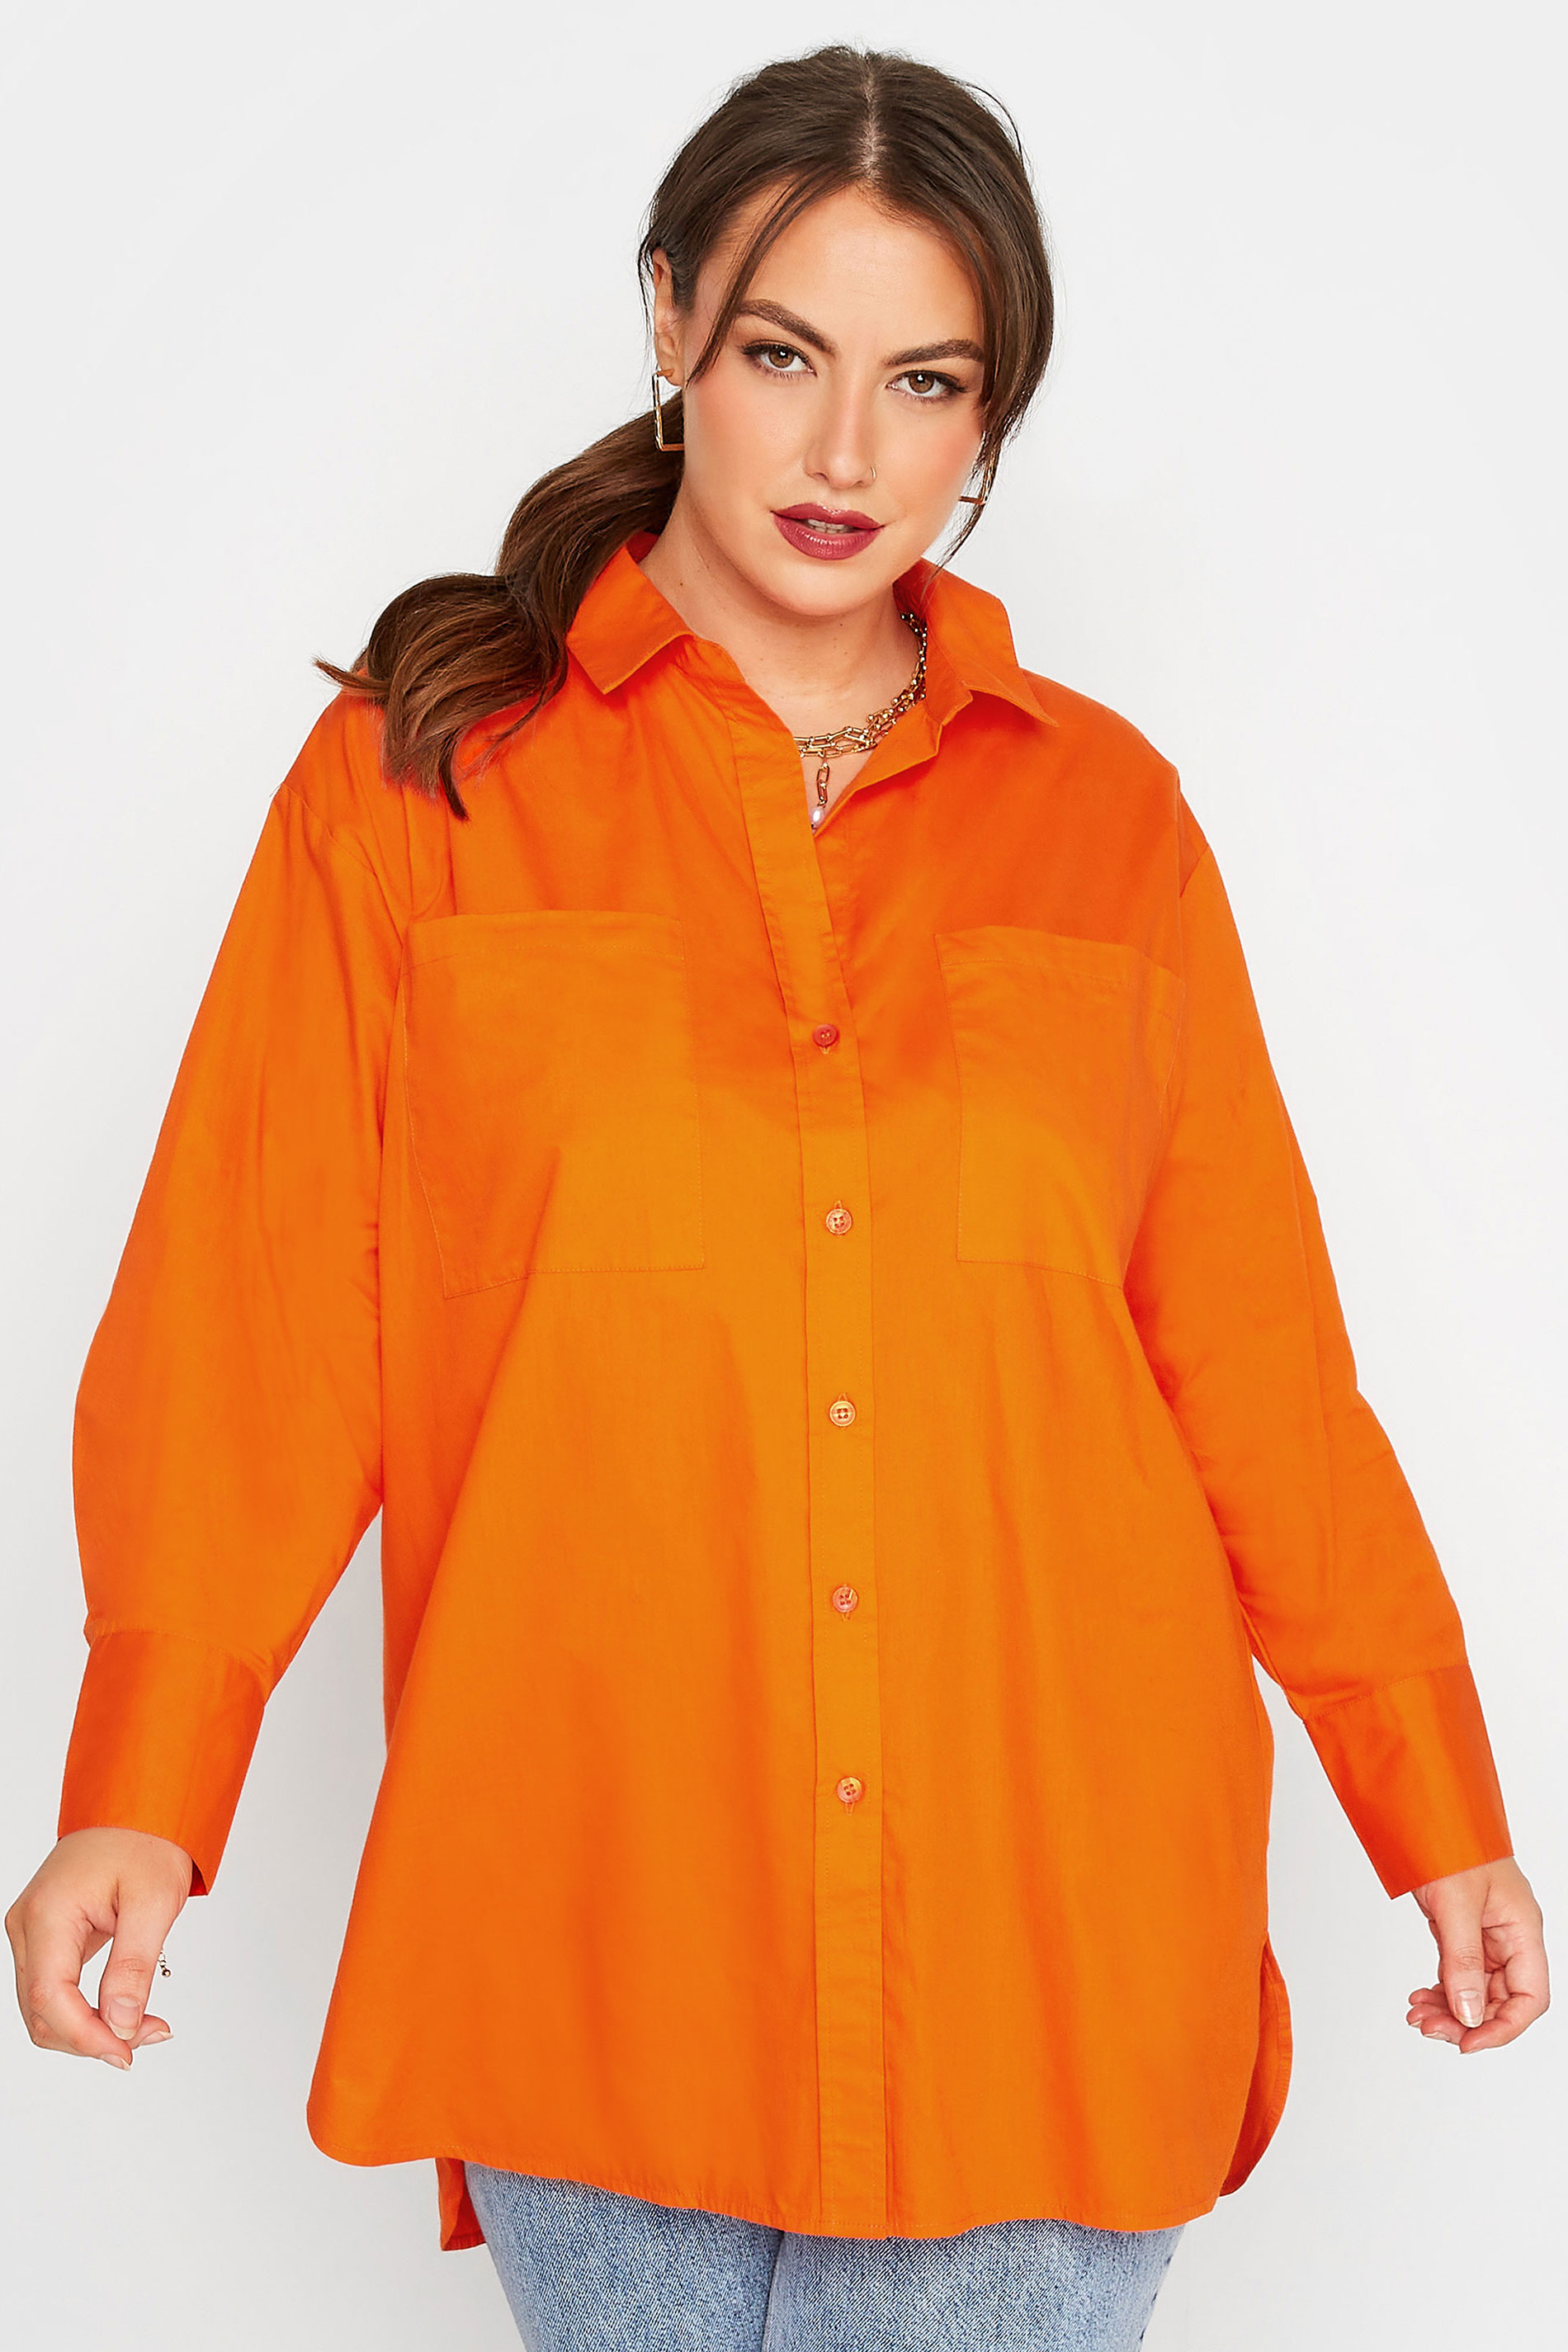 LIMITED COLLECTION Curve Bright Orange Oversized Boyfriend Shirt_A.jpg